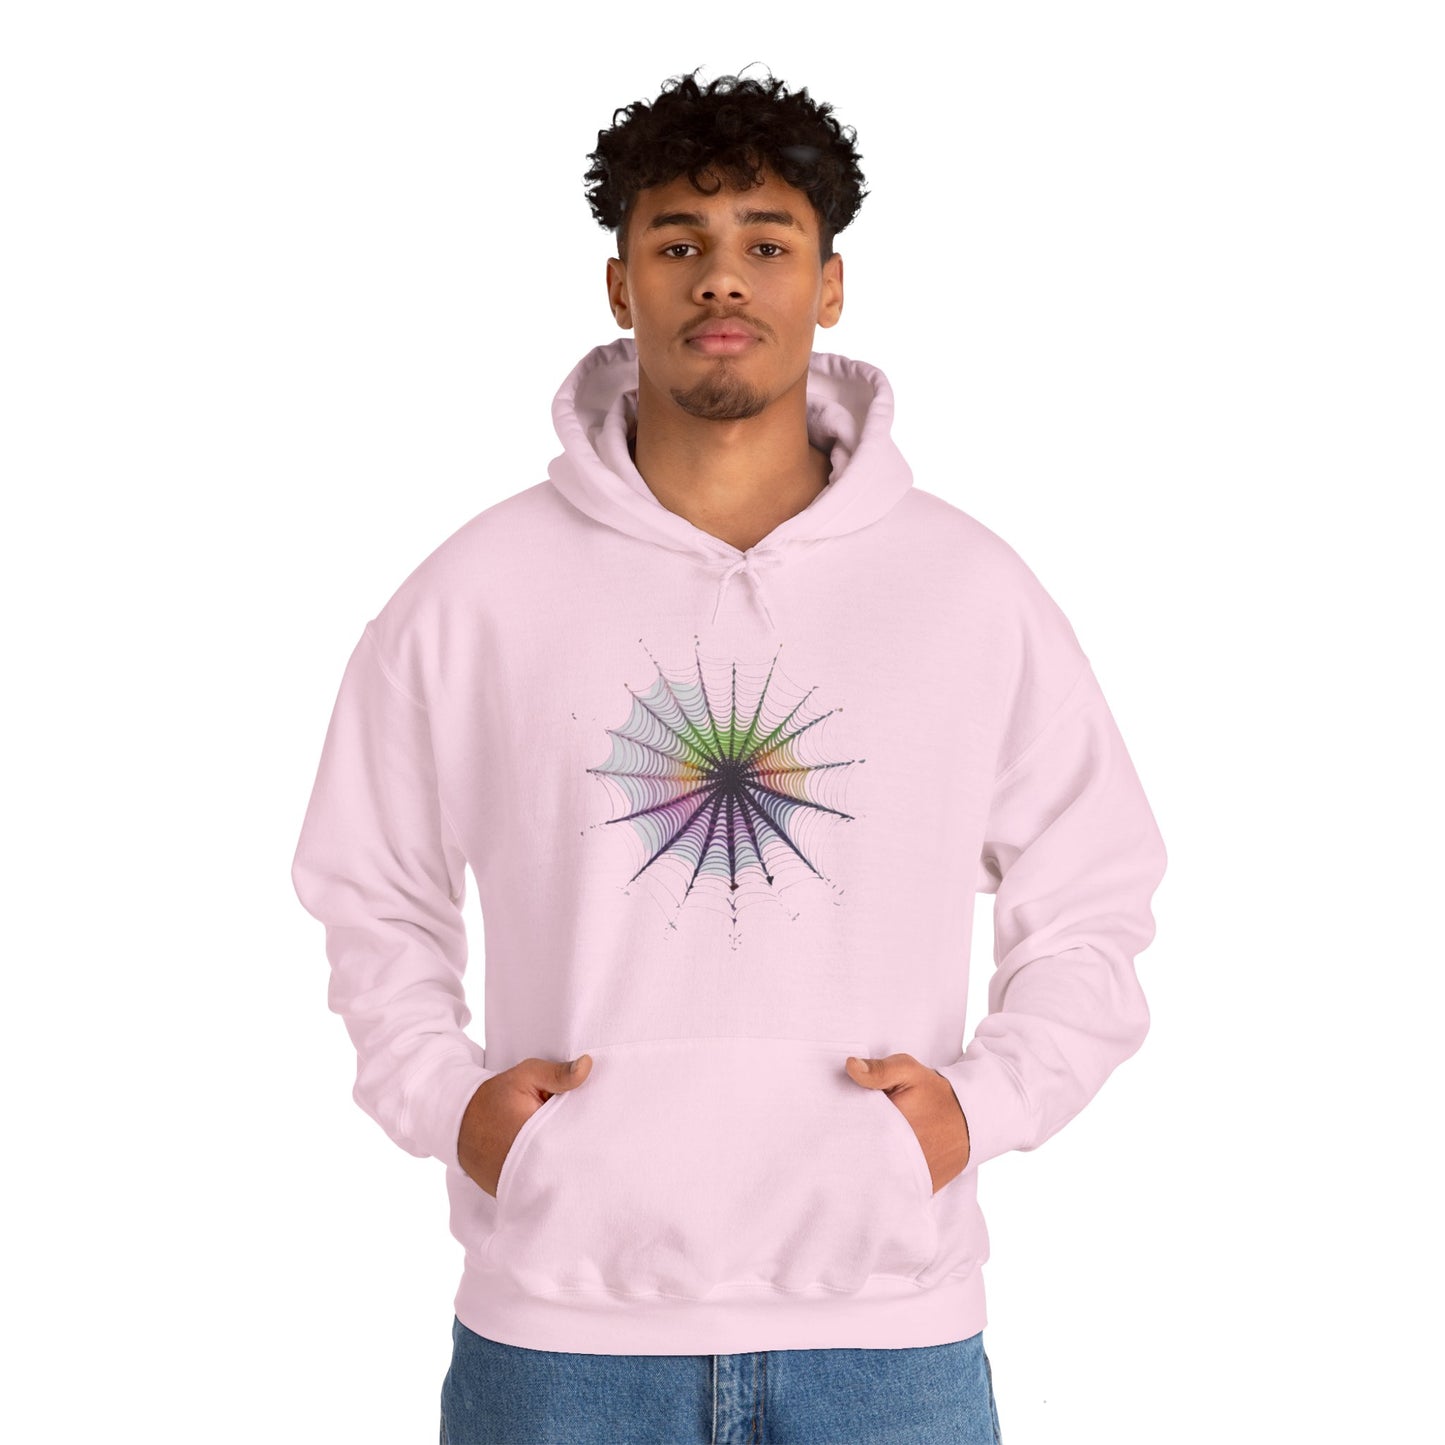 Colourful Spiderweb - Unisex Hooded Sweatshirt